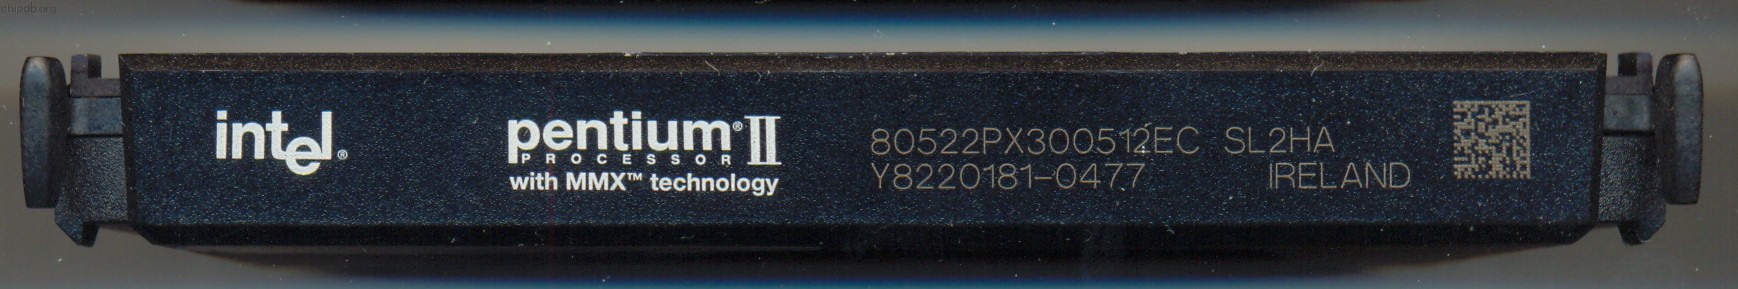 Intel Pentium II 80522PX300512EC SL2HA Ireland